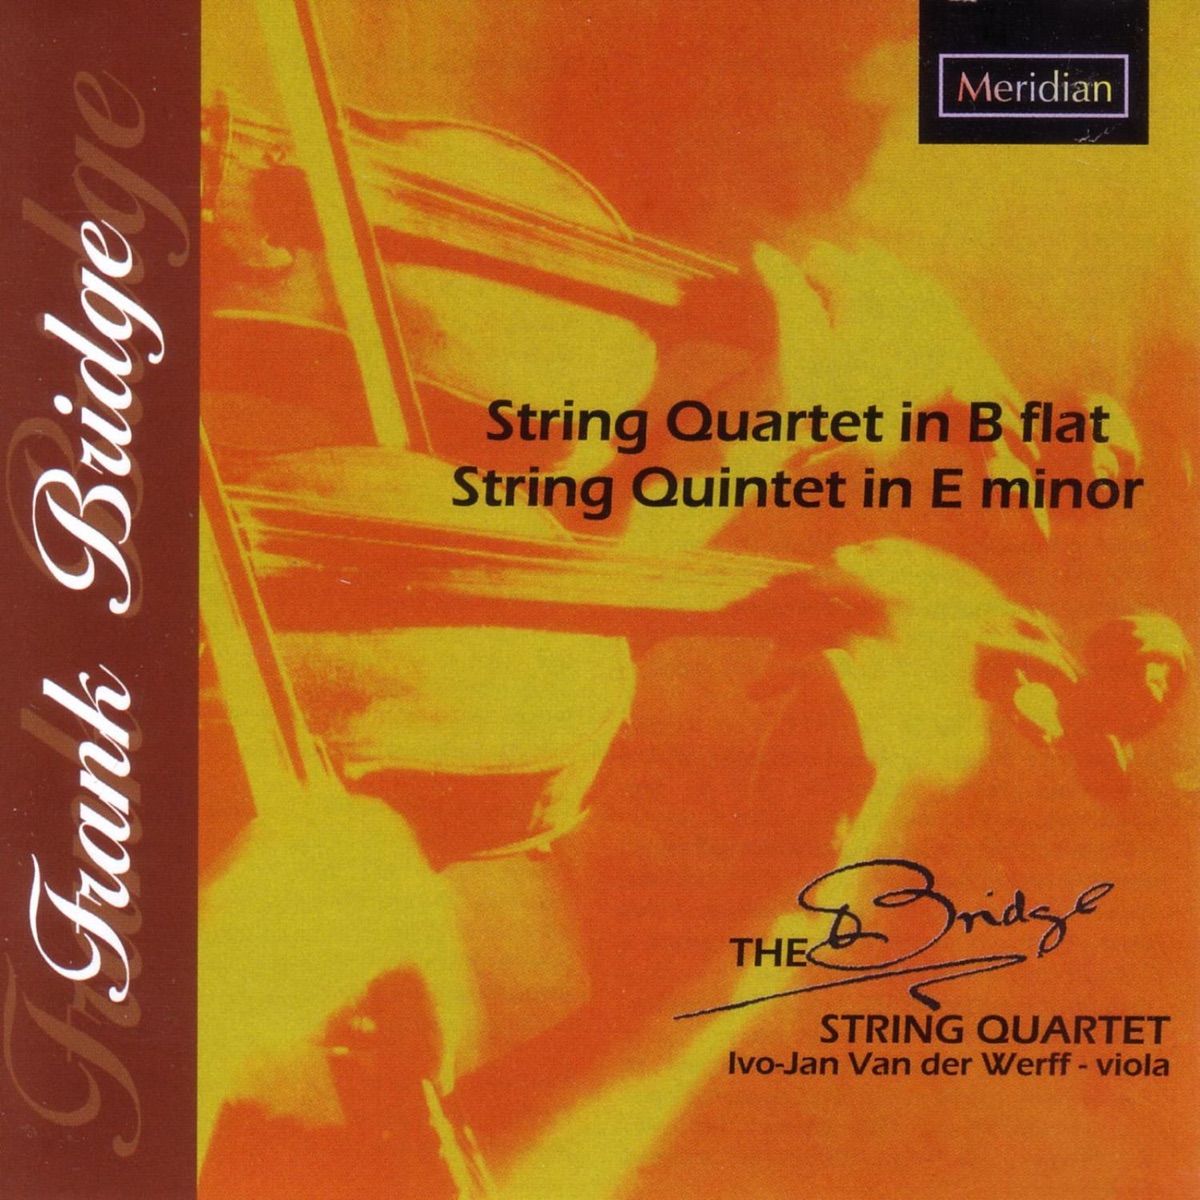 Frank Bridge: Chamber Music - Album by Bridge String Quartet - Apple Music